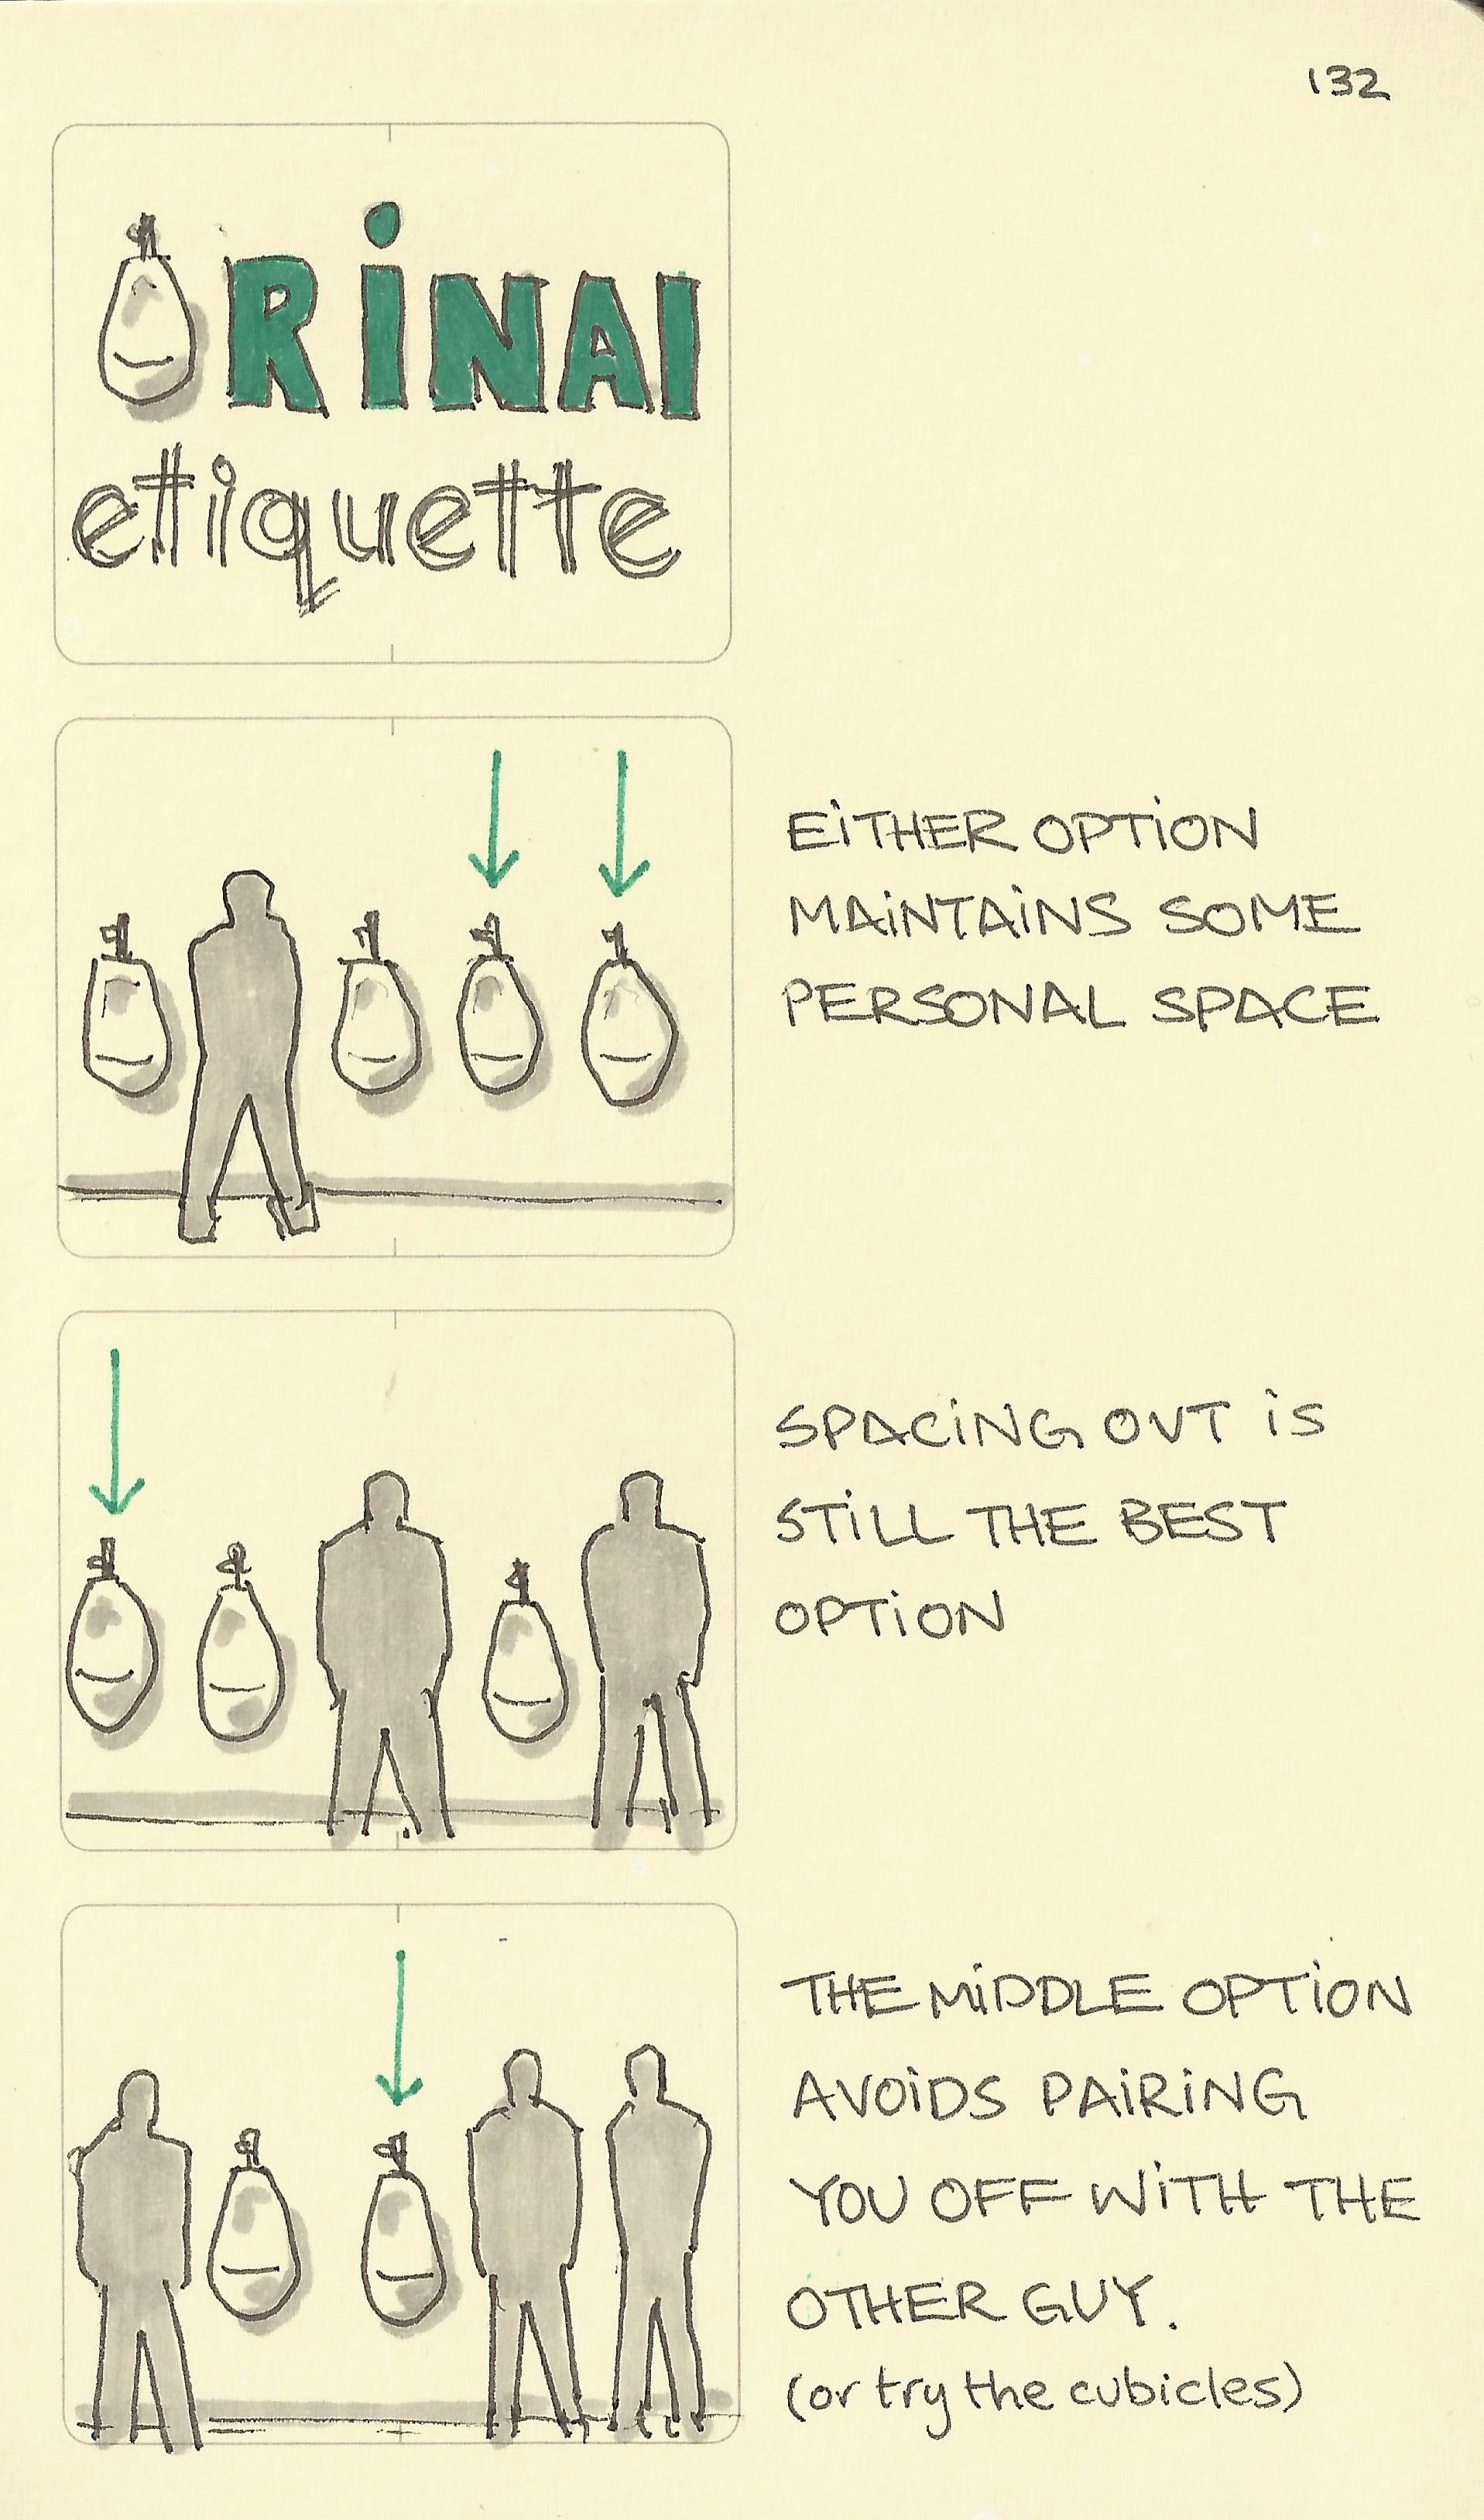 Urinal etiquette - Sketchplanations